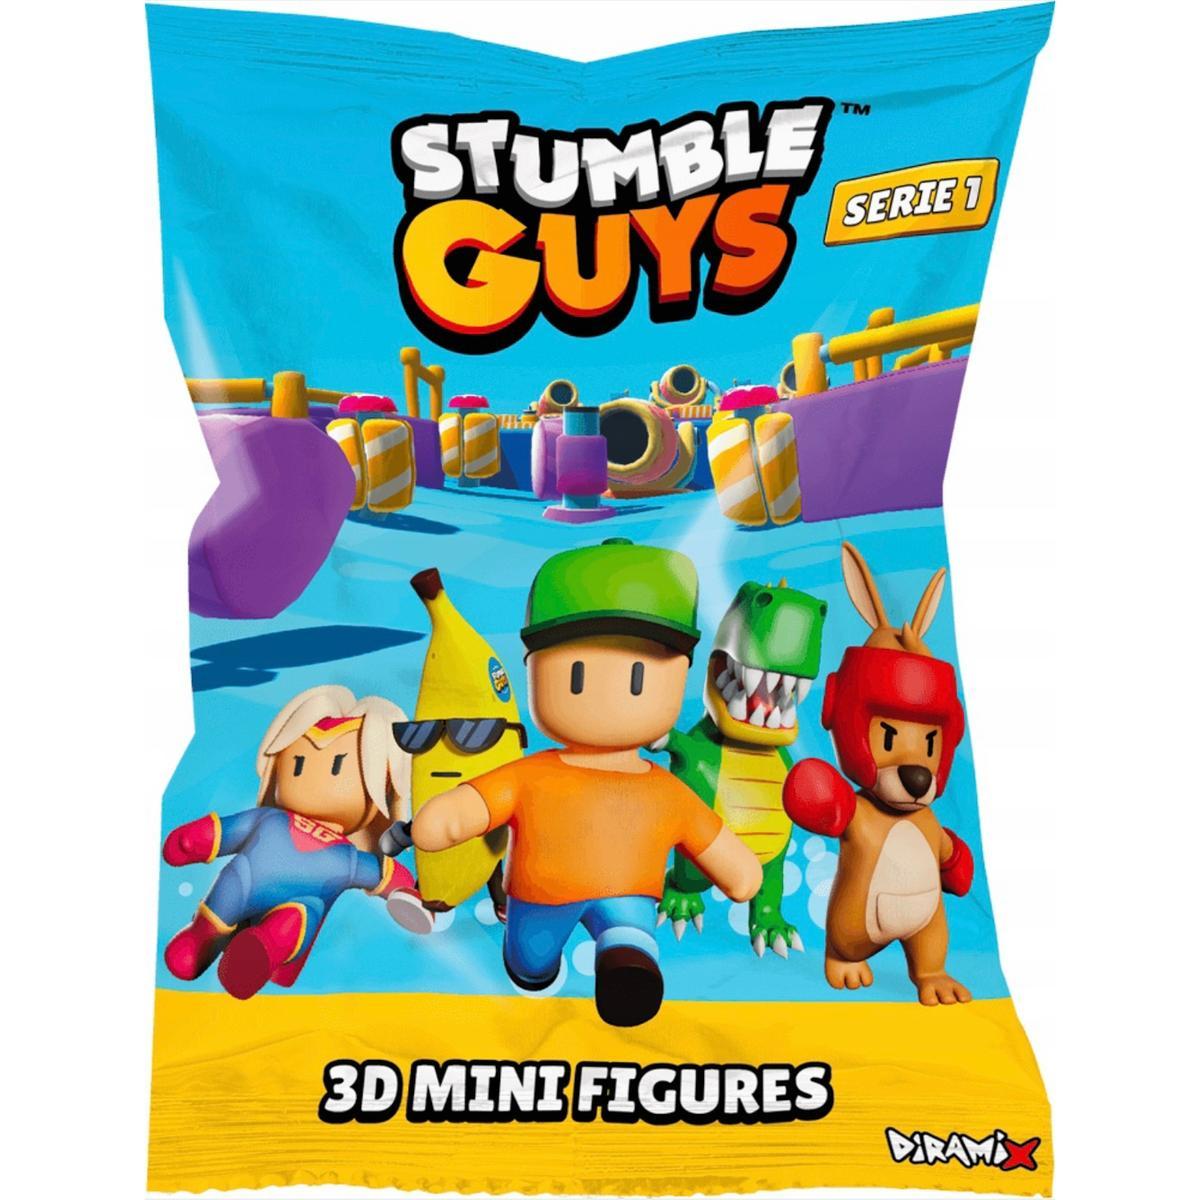 Stumble Guys saszetka niespodzianka oryginalna mini figurka 3D seria 1 nr. 2